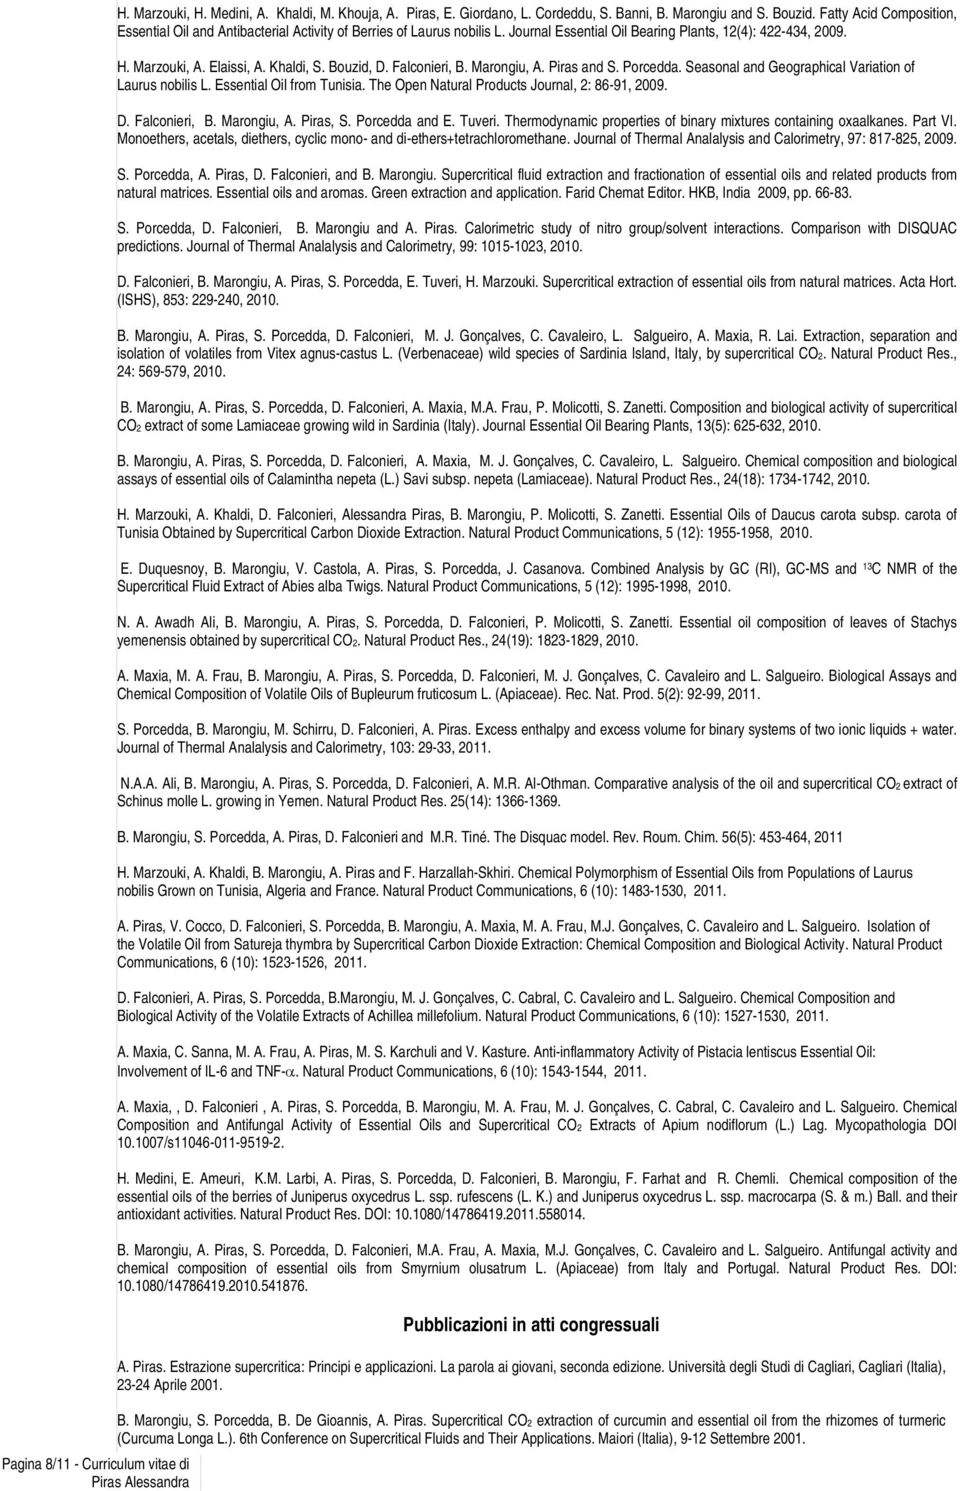 Bouzid, D. Falconieri, B. Marongiu, A. Piras and S. Porcedda. Seasonal and Geographical Variation of Laurus nobilis L. Essential Oil from Tunisia. The Open Natural Products Journal, 2: 86-91, 2009. D. Falconieri, B. Marongiu, A. Piras, S.